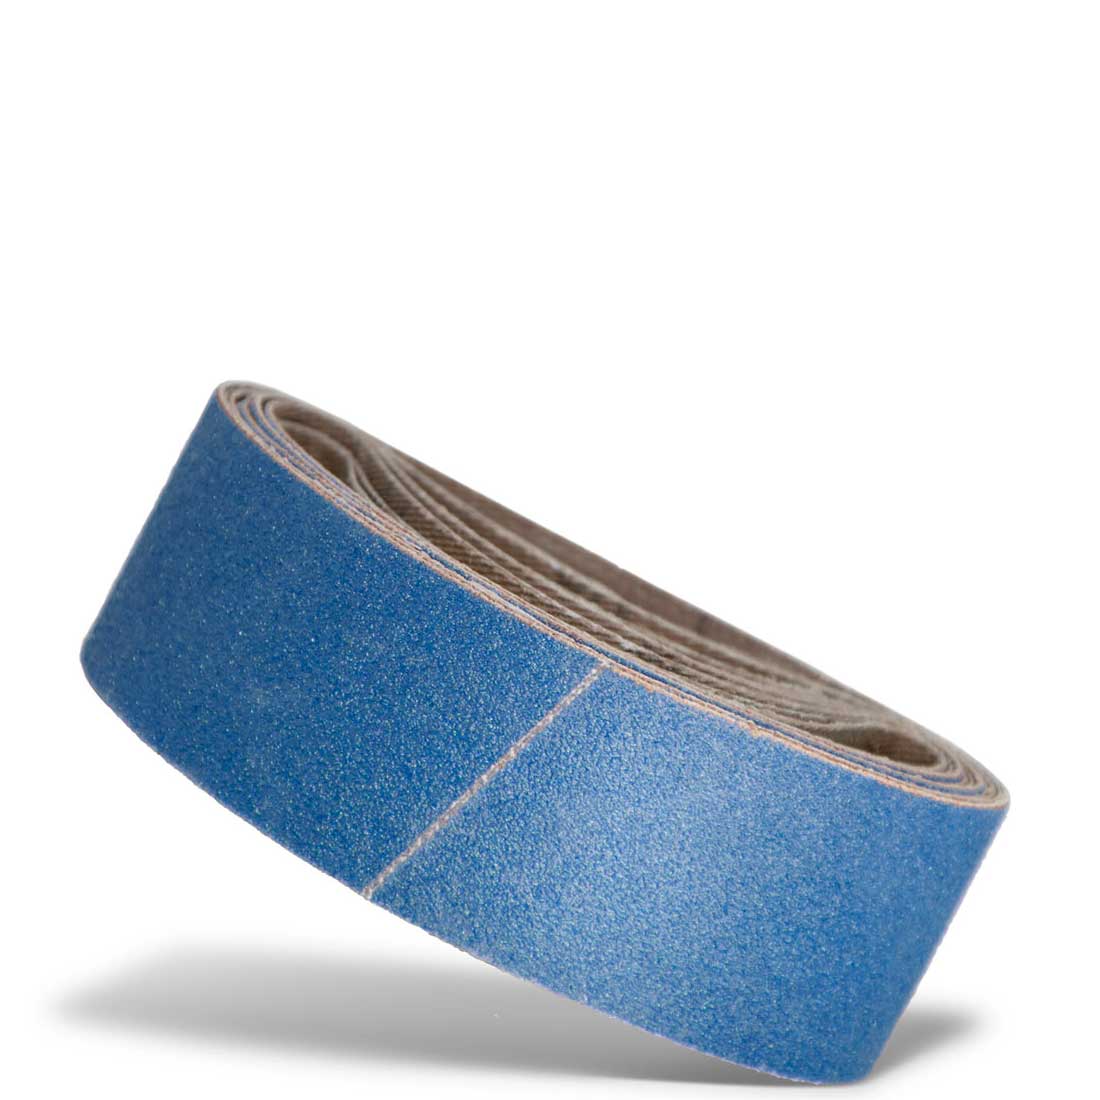 MENZER sanding belts for hand belt sanders, G36–120, 303 x 40 mm / zirconium aluminium oxide